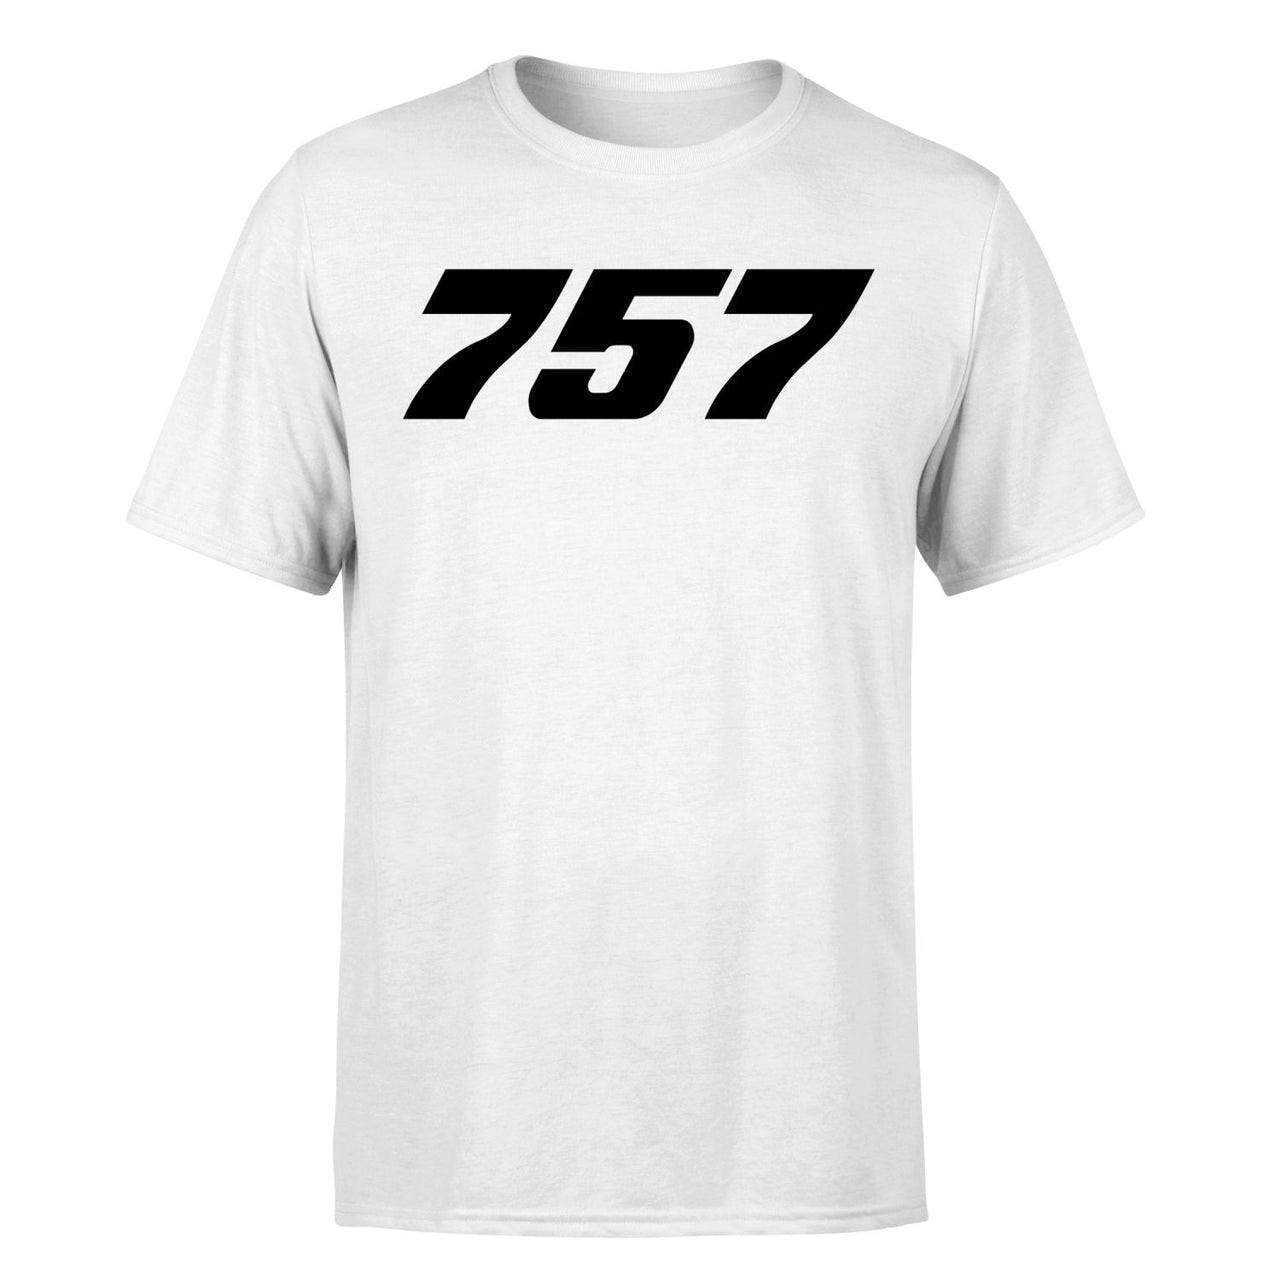 757 Flat Text Designed T-Shirts